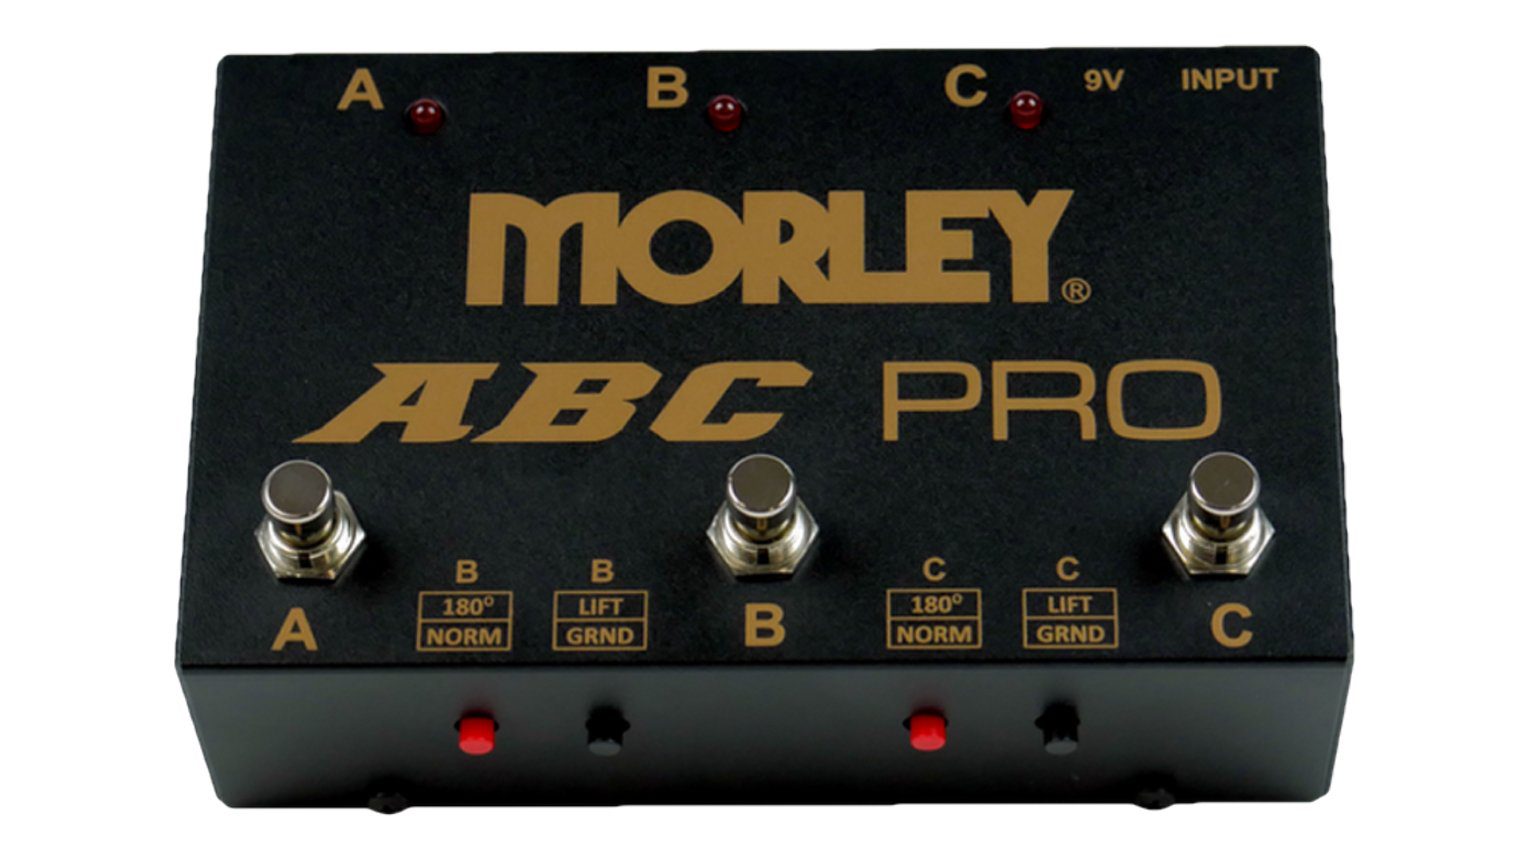 Morley ABC Pro